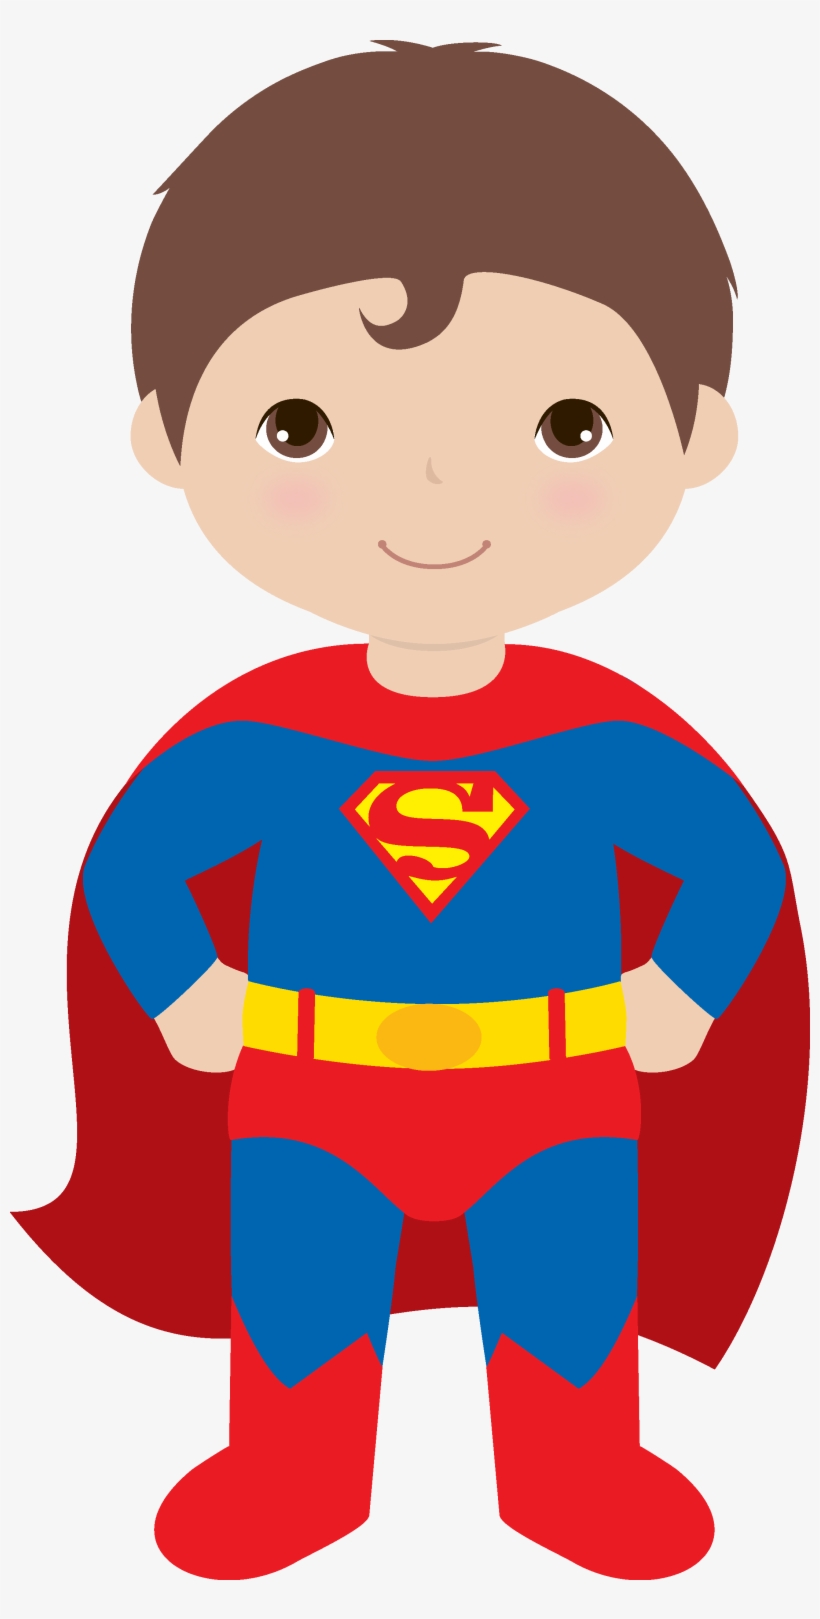 Featured image of post Superman Desenho Png Superman illustration superman batman lex luthor flight superman comics heroes png